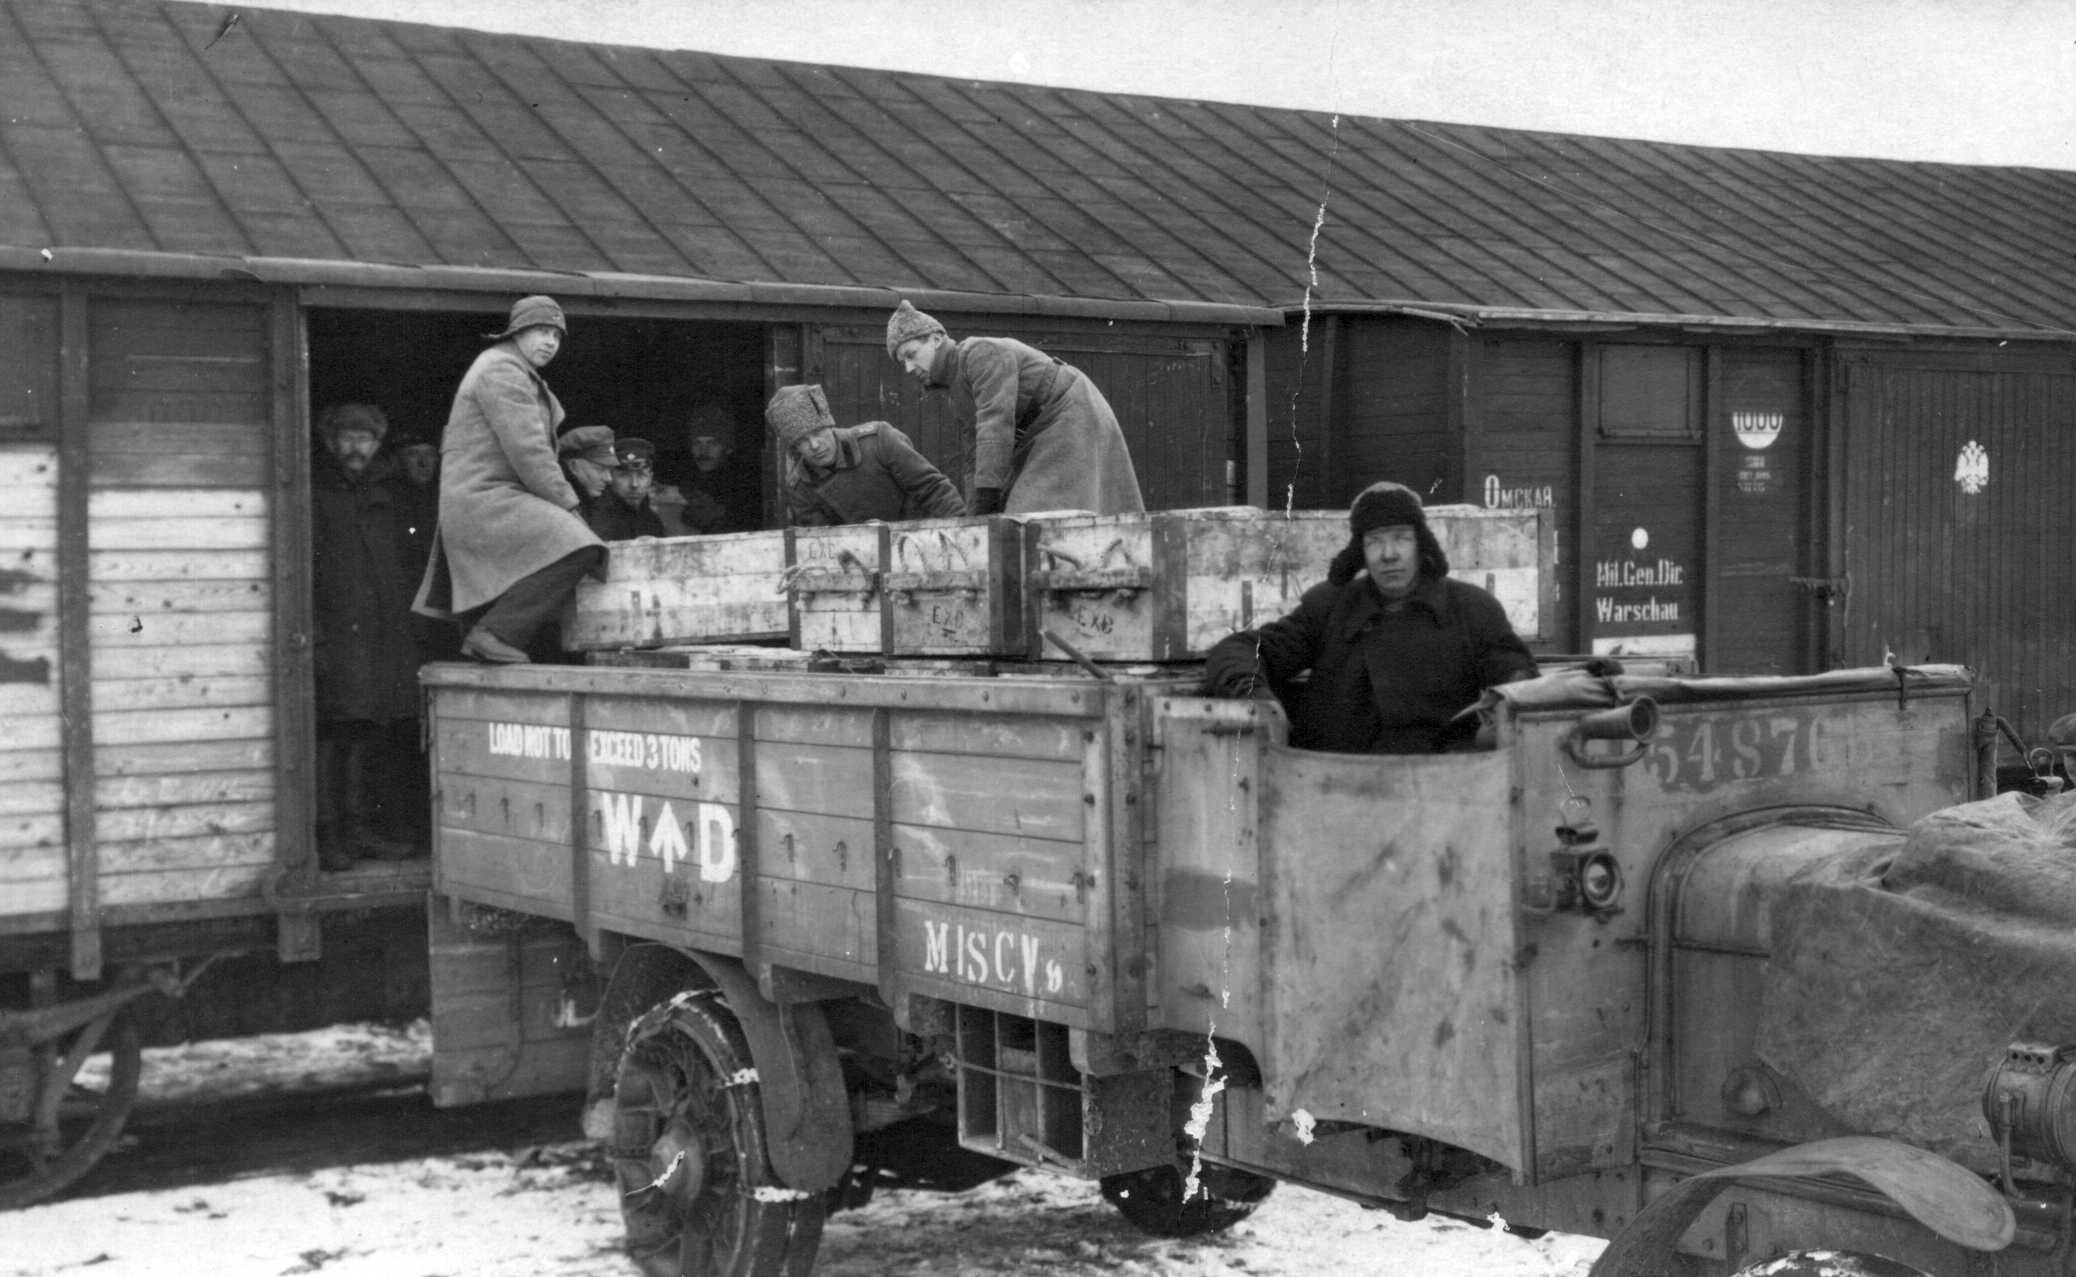 Tartu Railway Station - Fracht Station: loading of goods for the truck. 1919. Photo Paric.